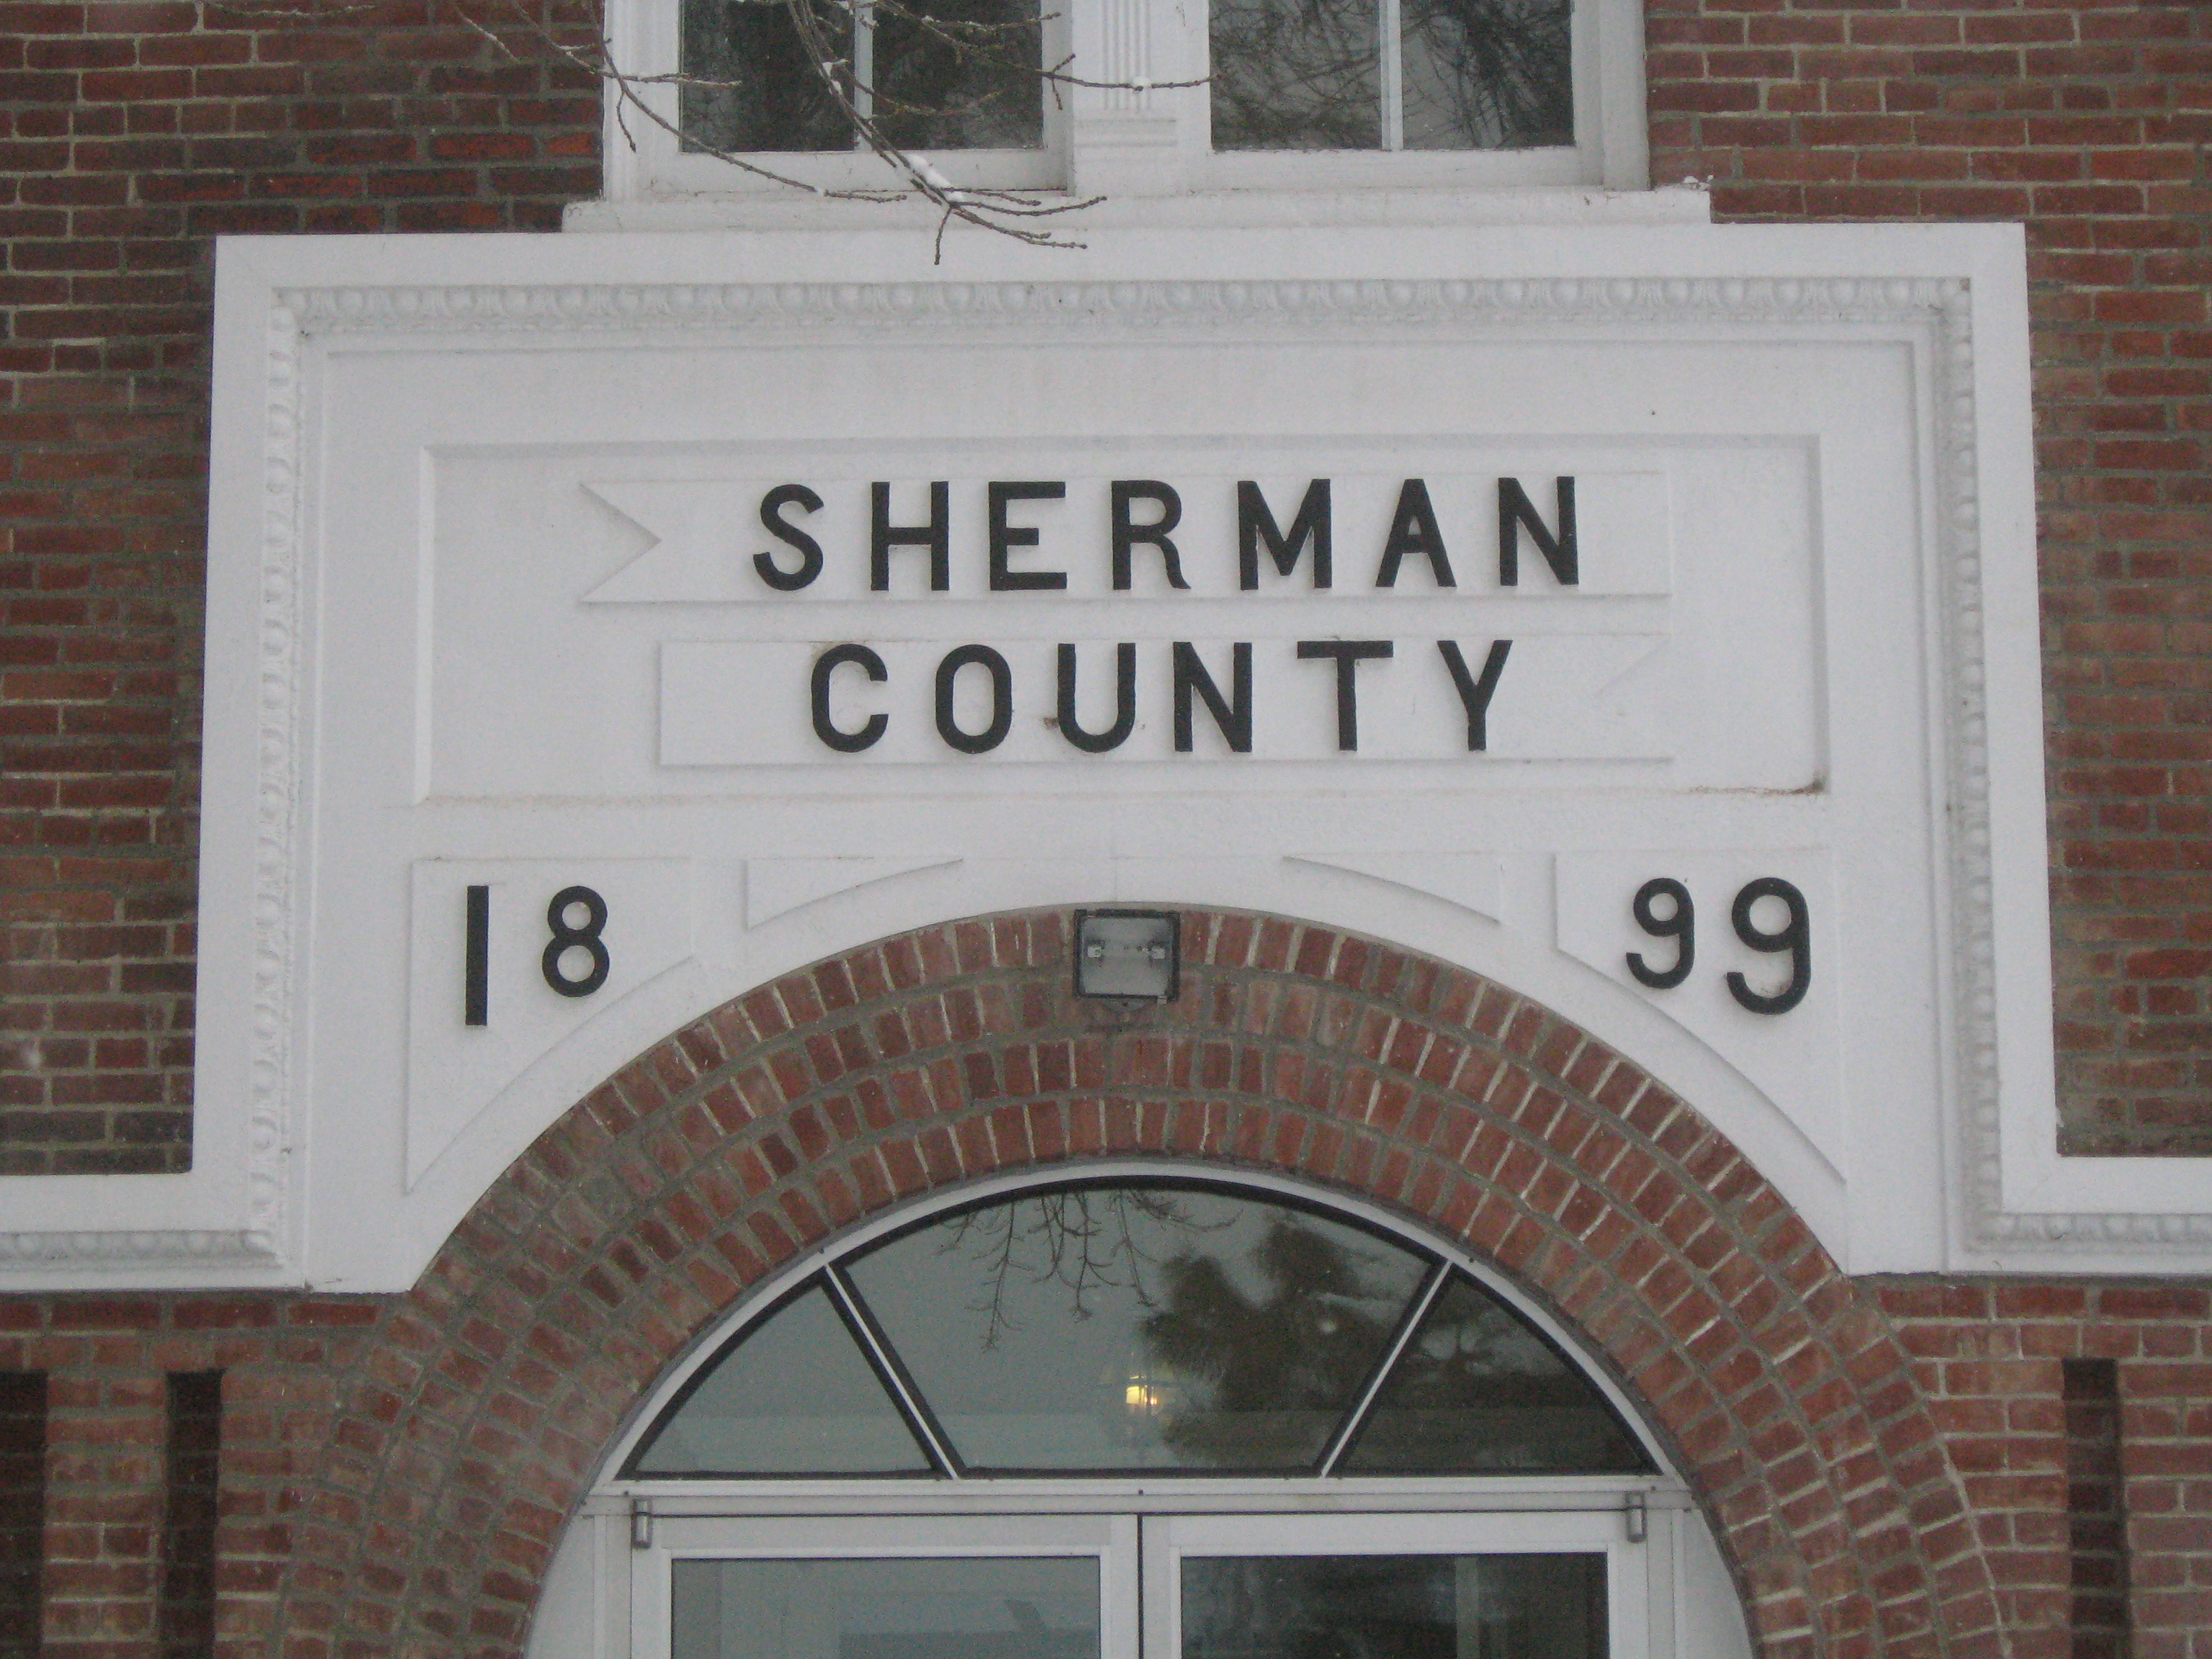 Sherman County Courthouse Sherman County